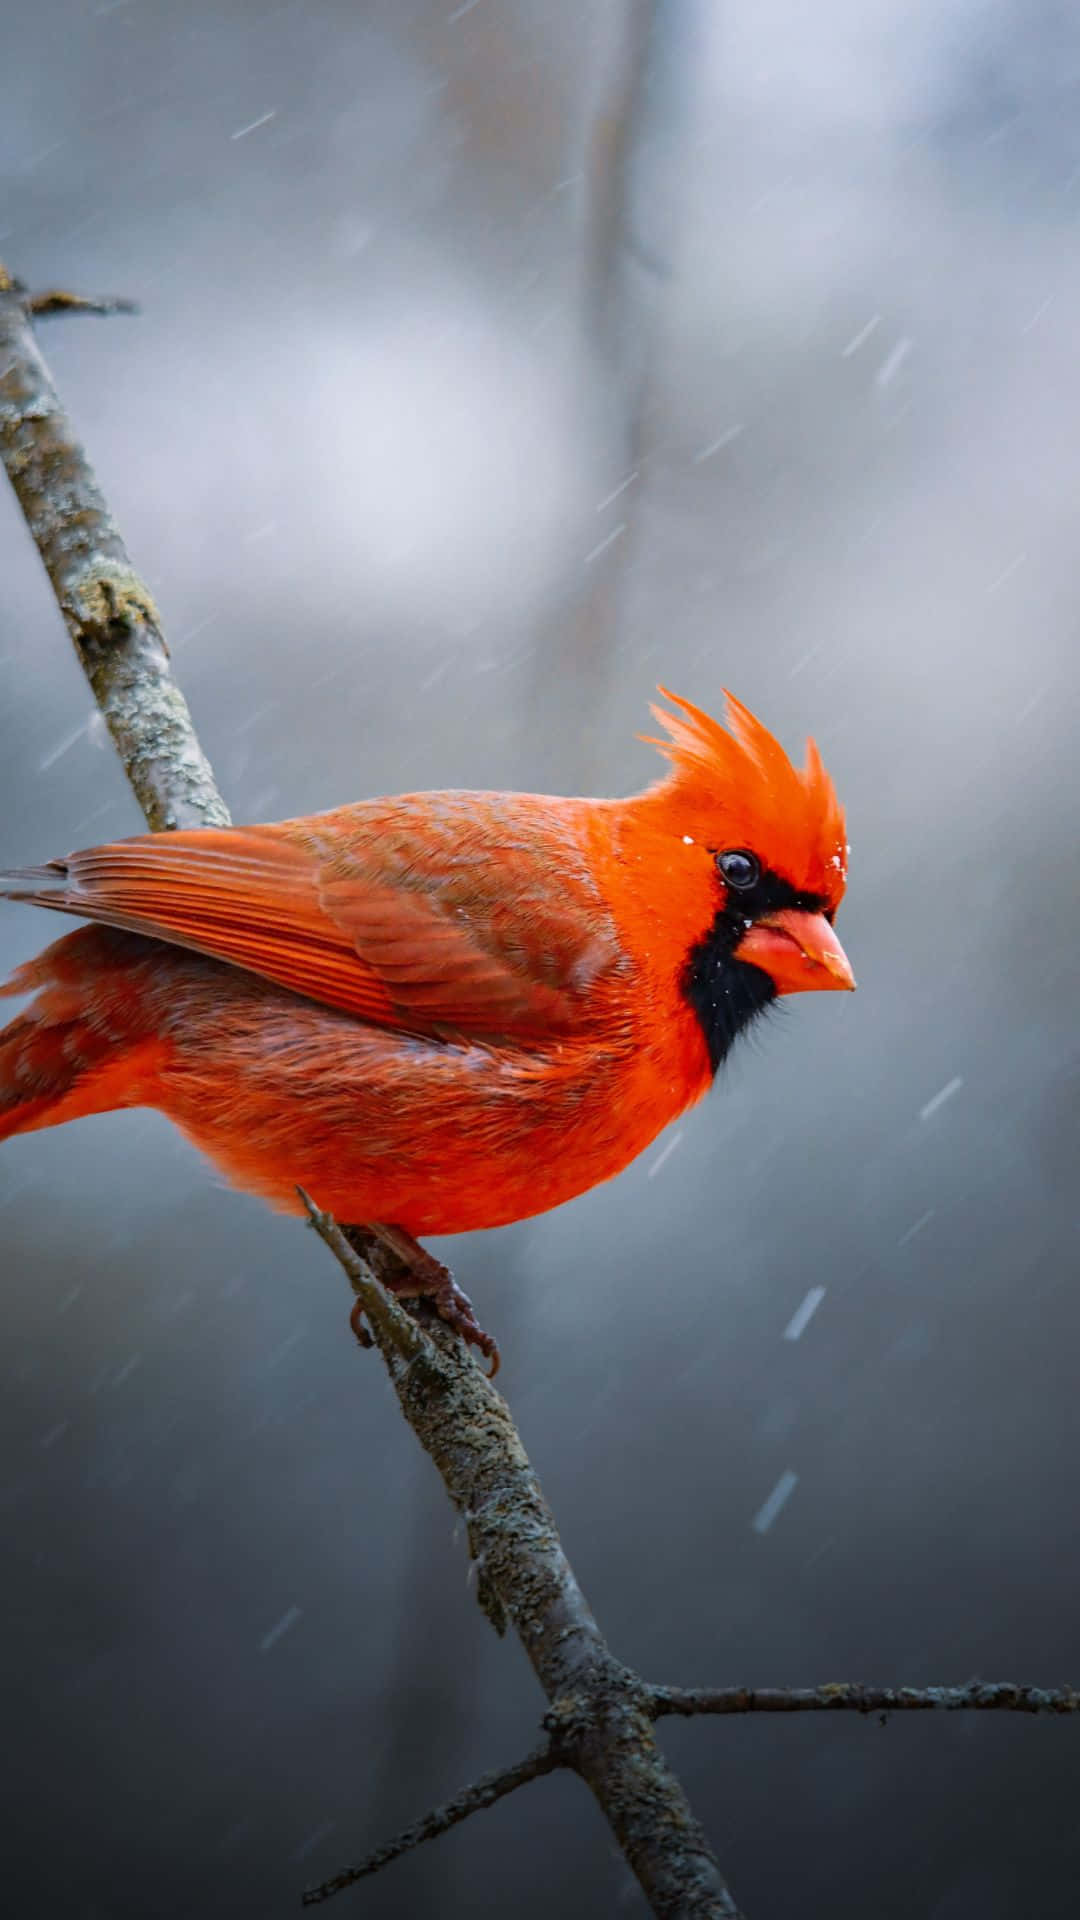 Winter Northern Red Cardinal Bird Iphone Image Wallpaper